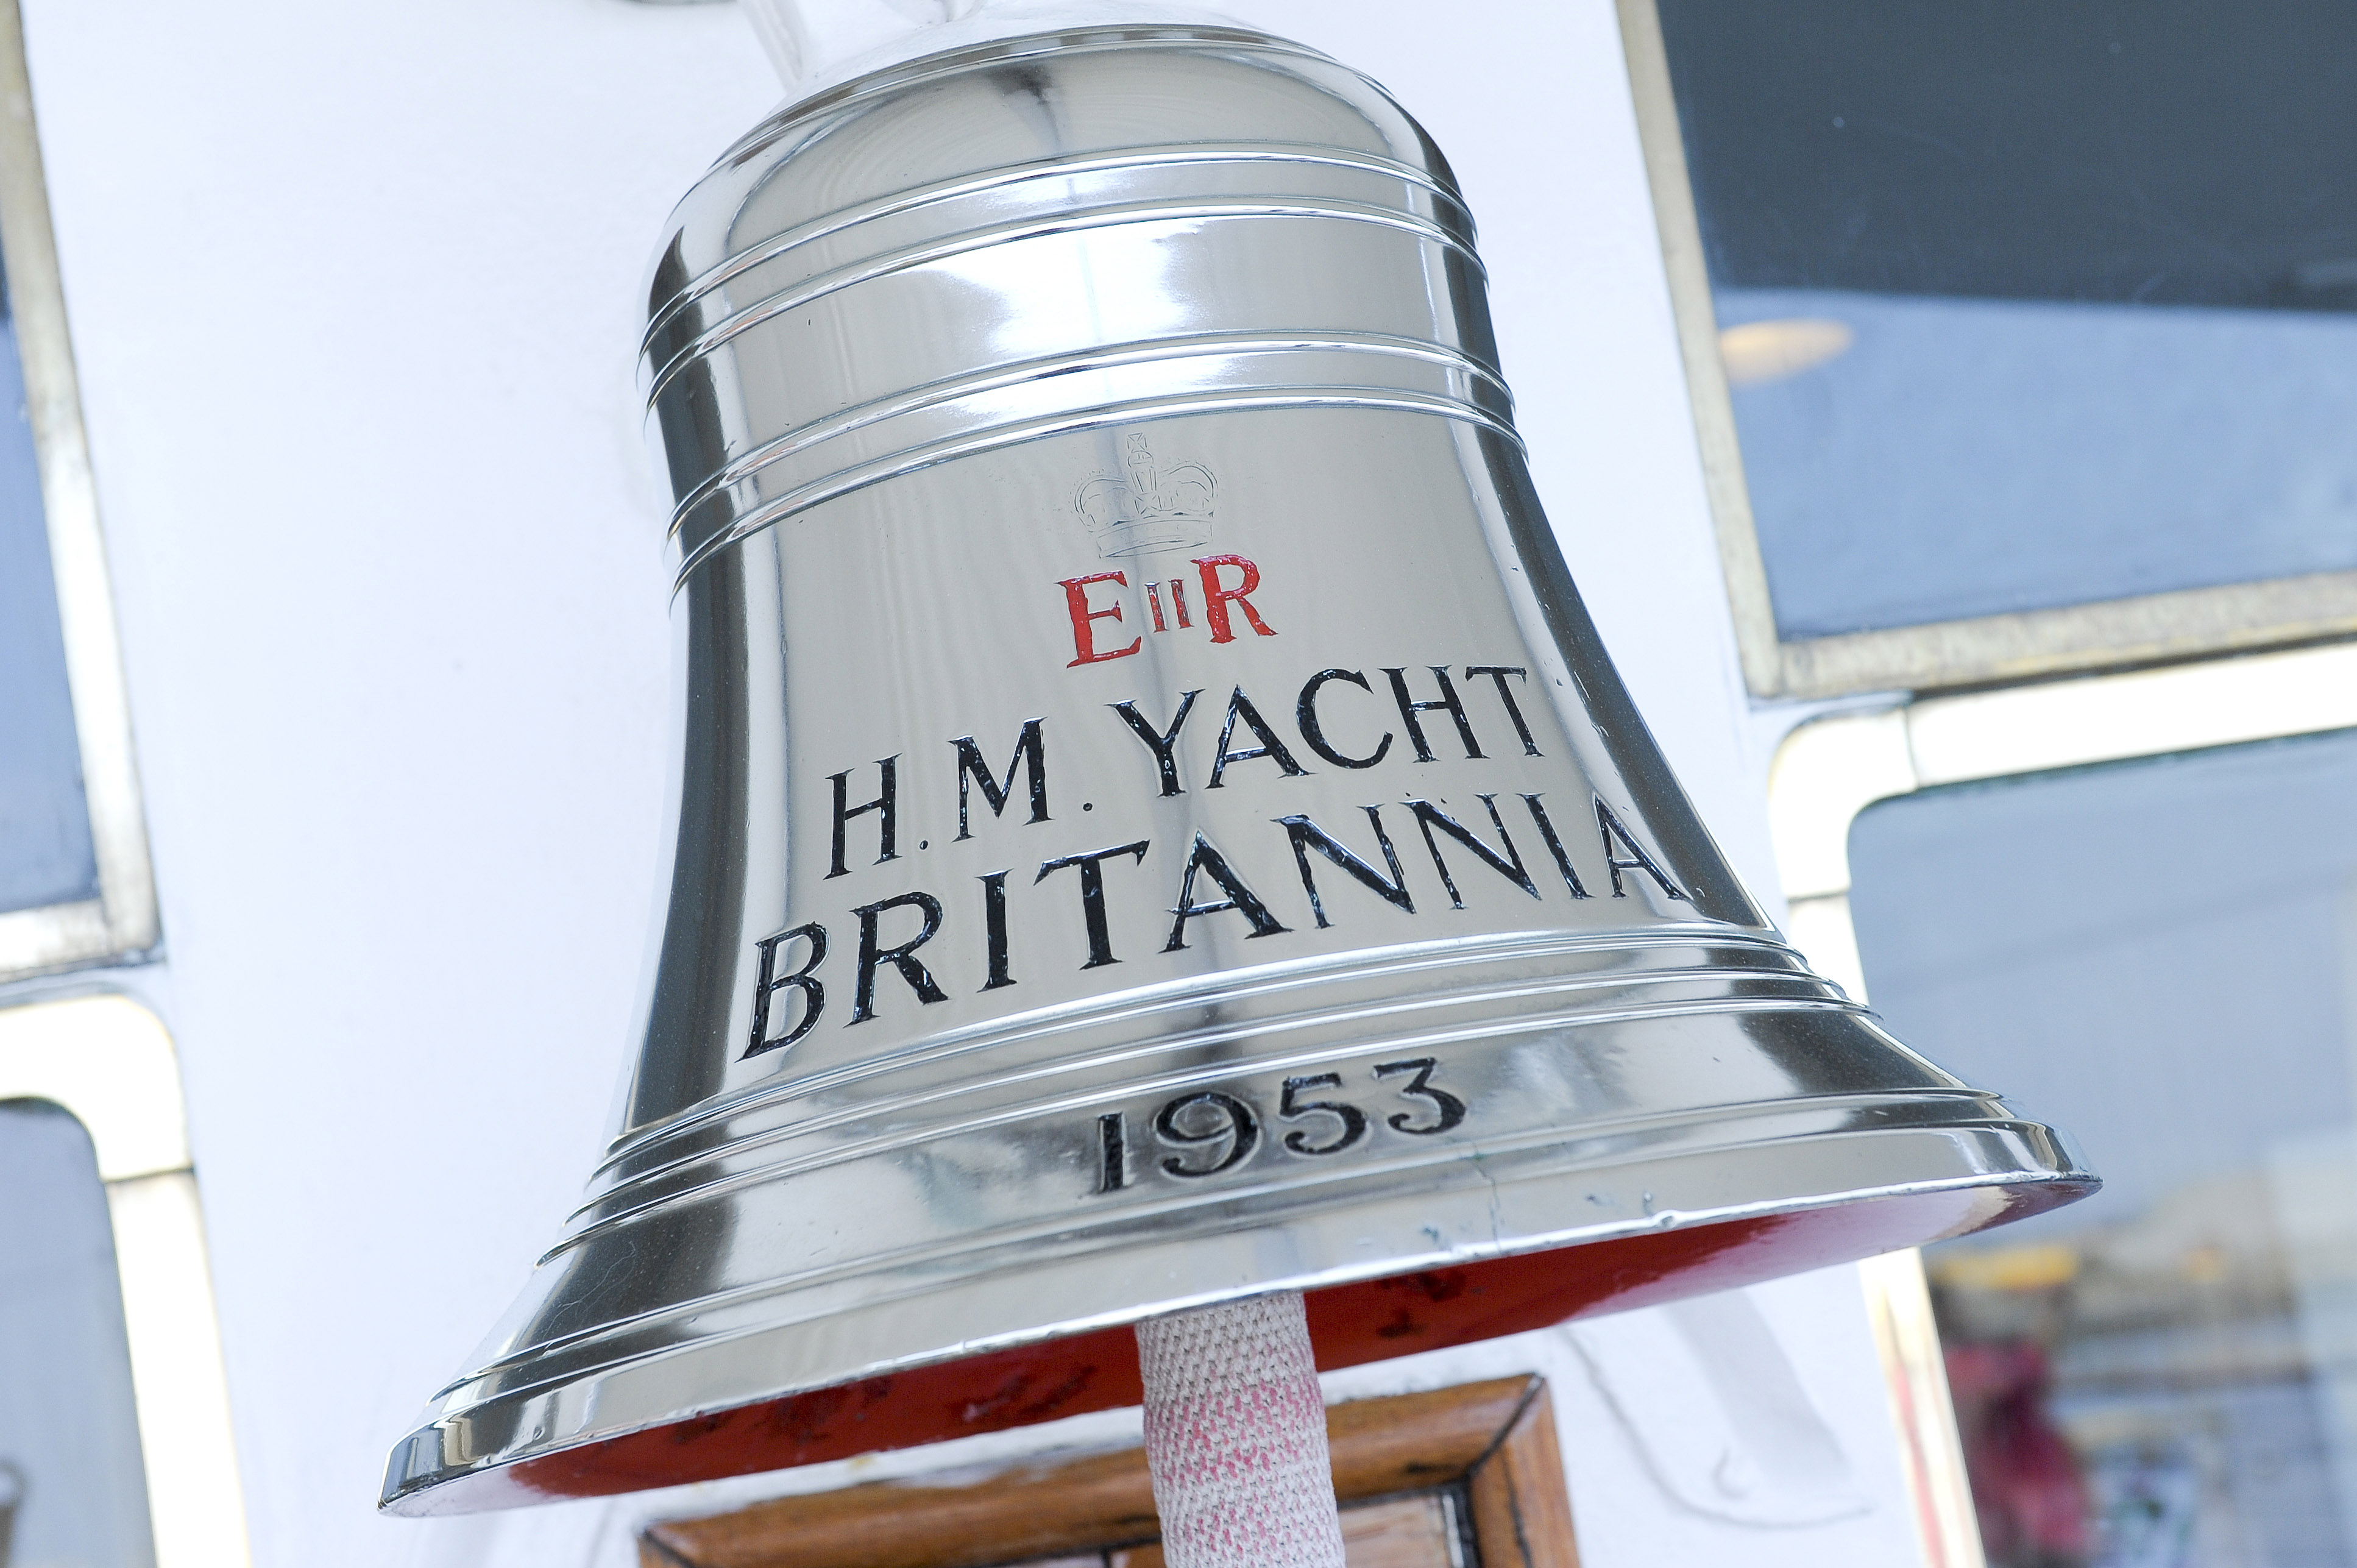 the royal yacht britannia logo